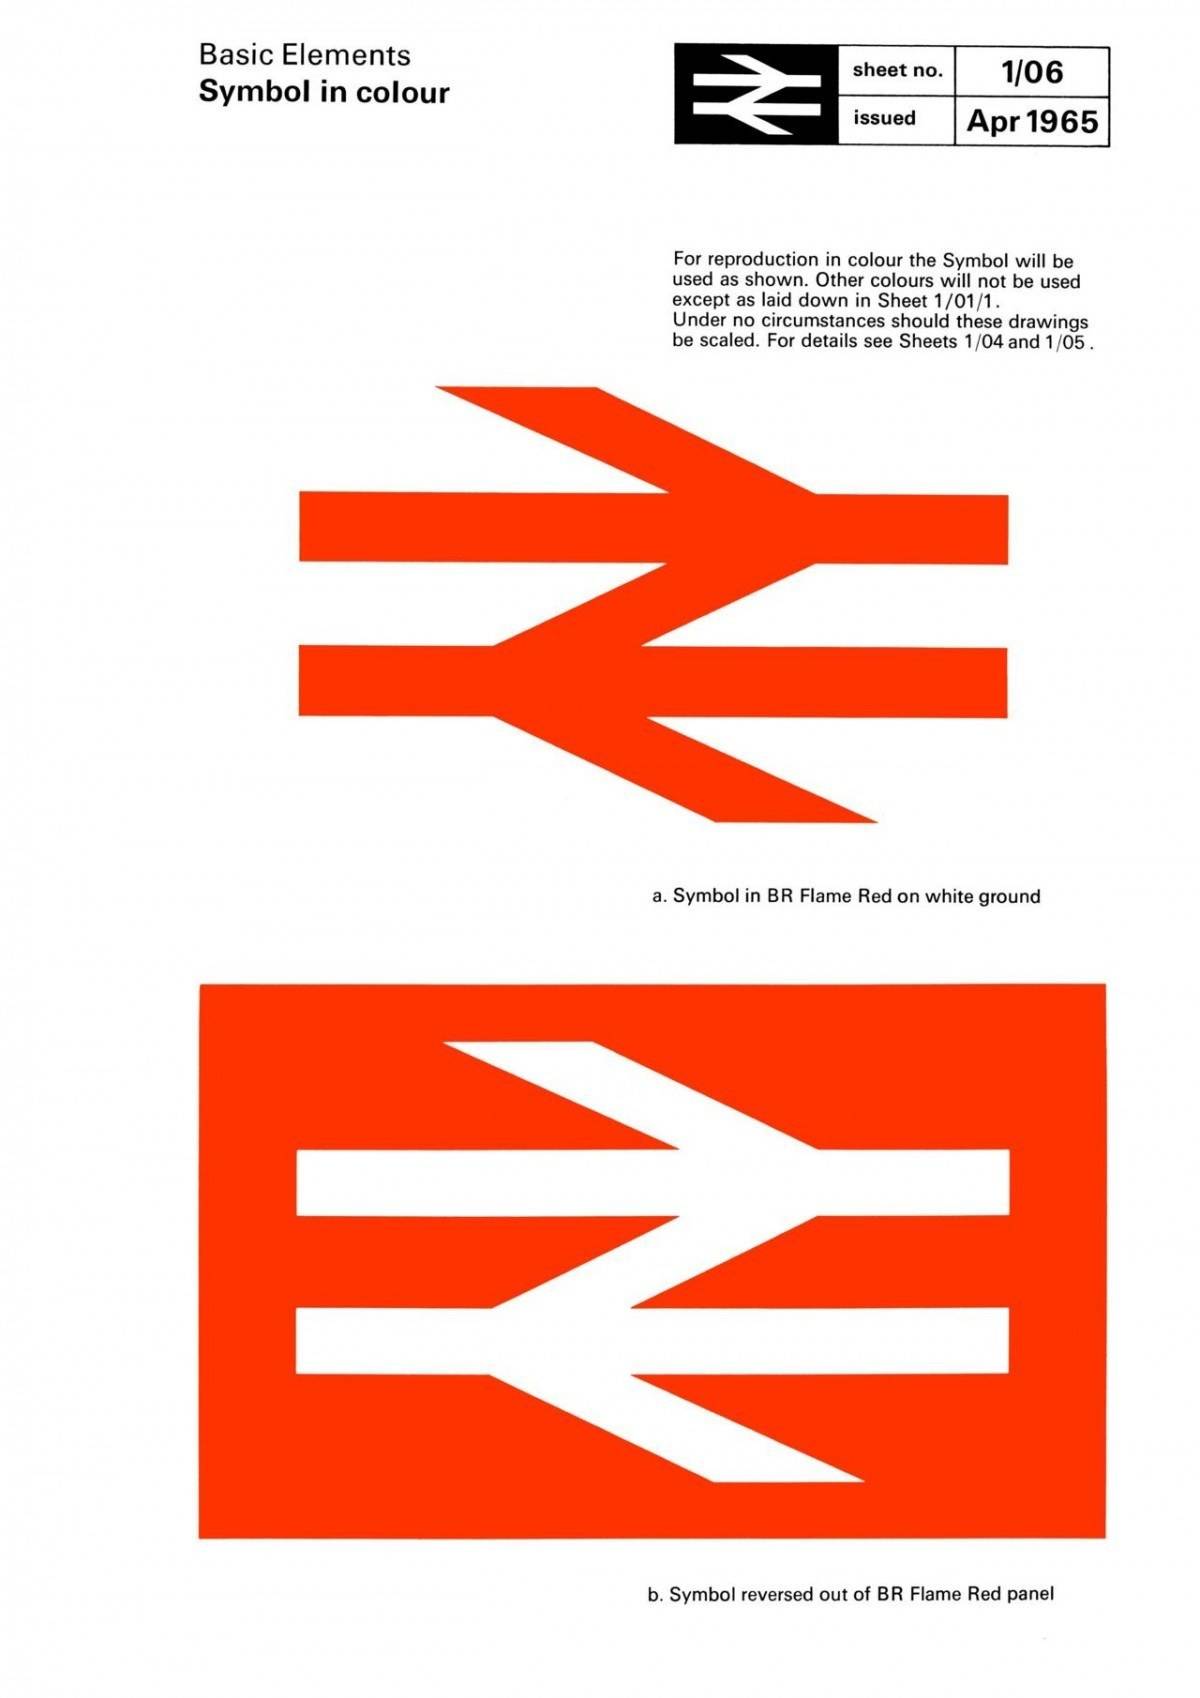 British Rail logo was created by Gerry Barney 2